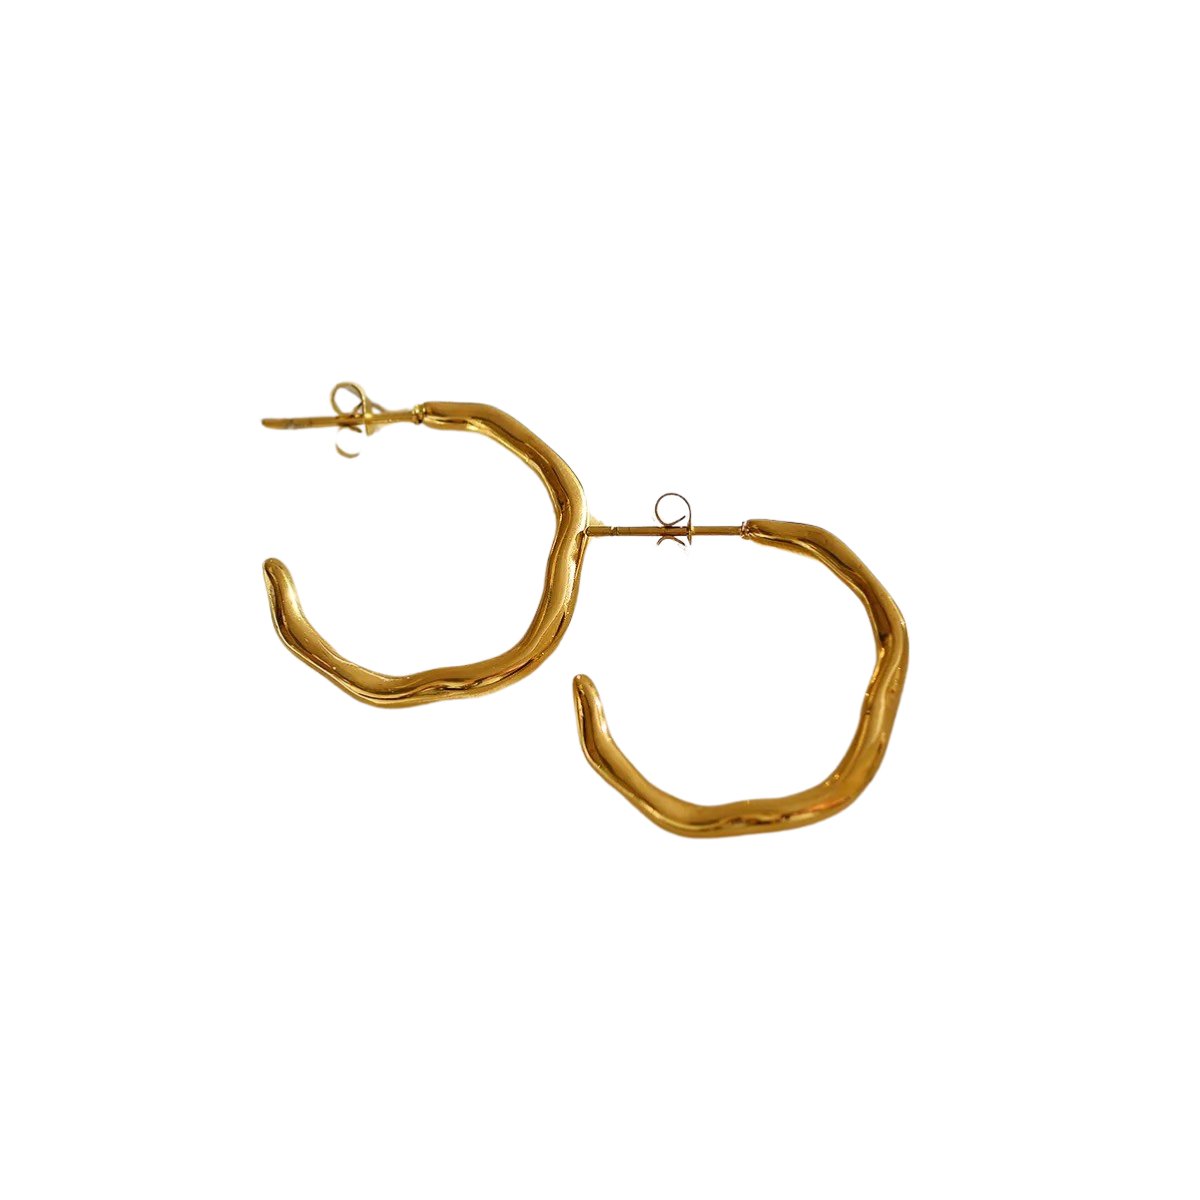 SAVANNAH STAINLESS STEEL OPEN HOOPS EARRINGS - Carol & Co Jewelry